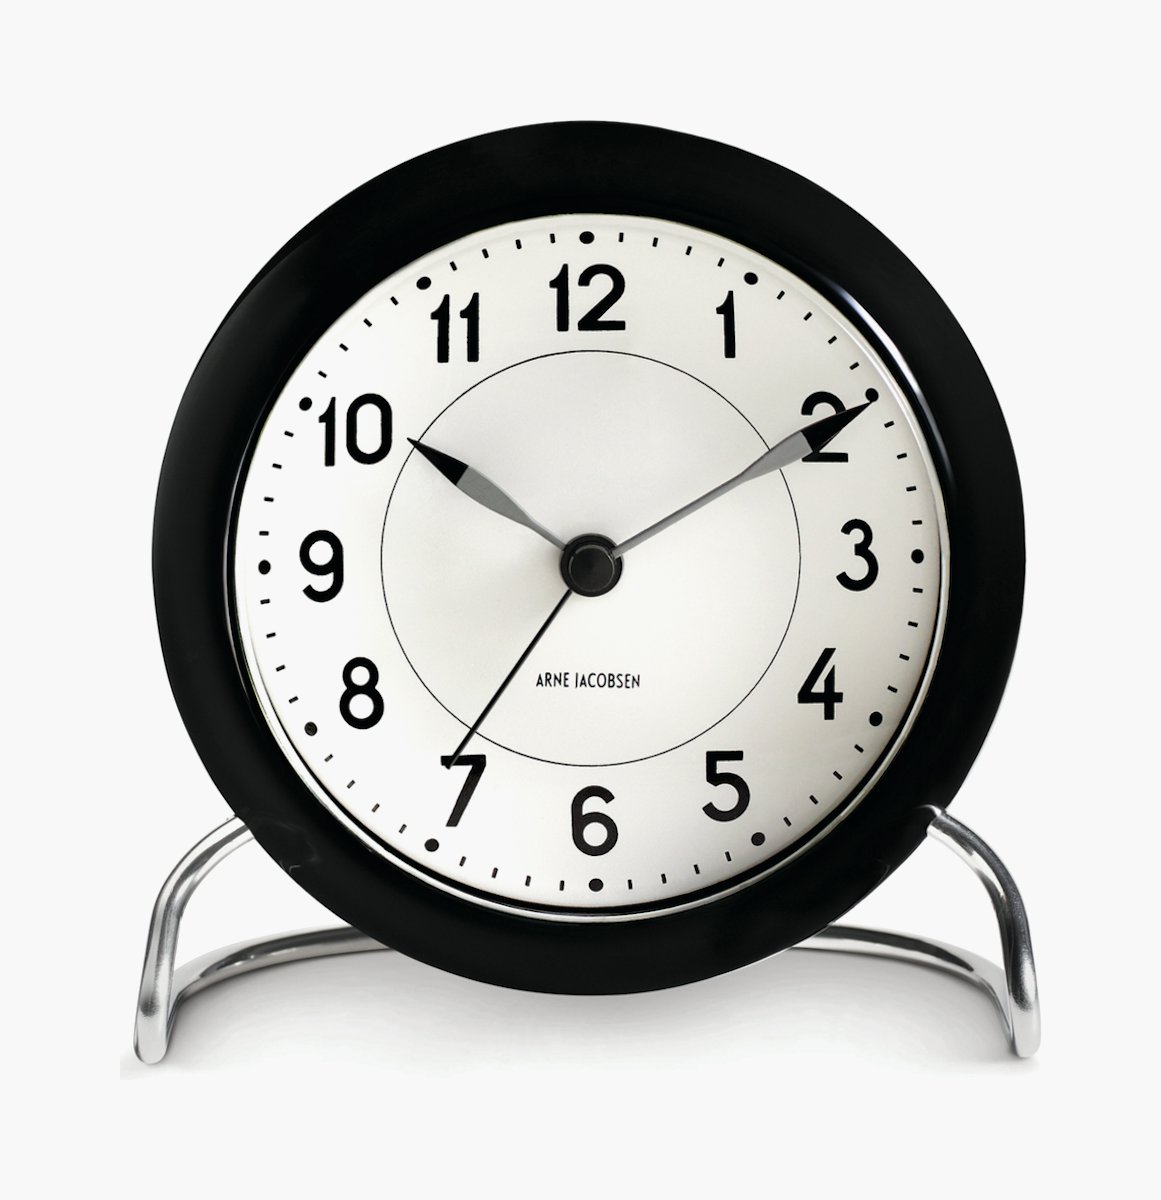 Station Alarm Clock